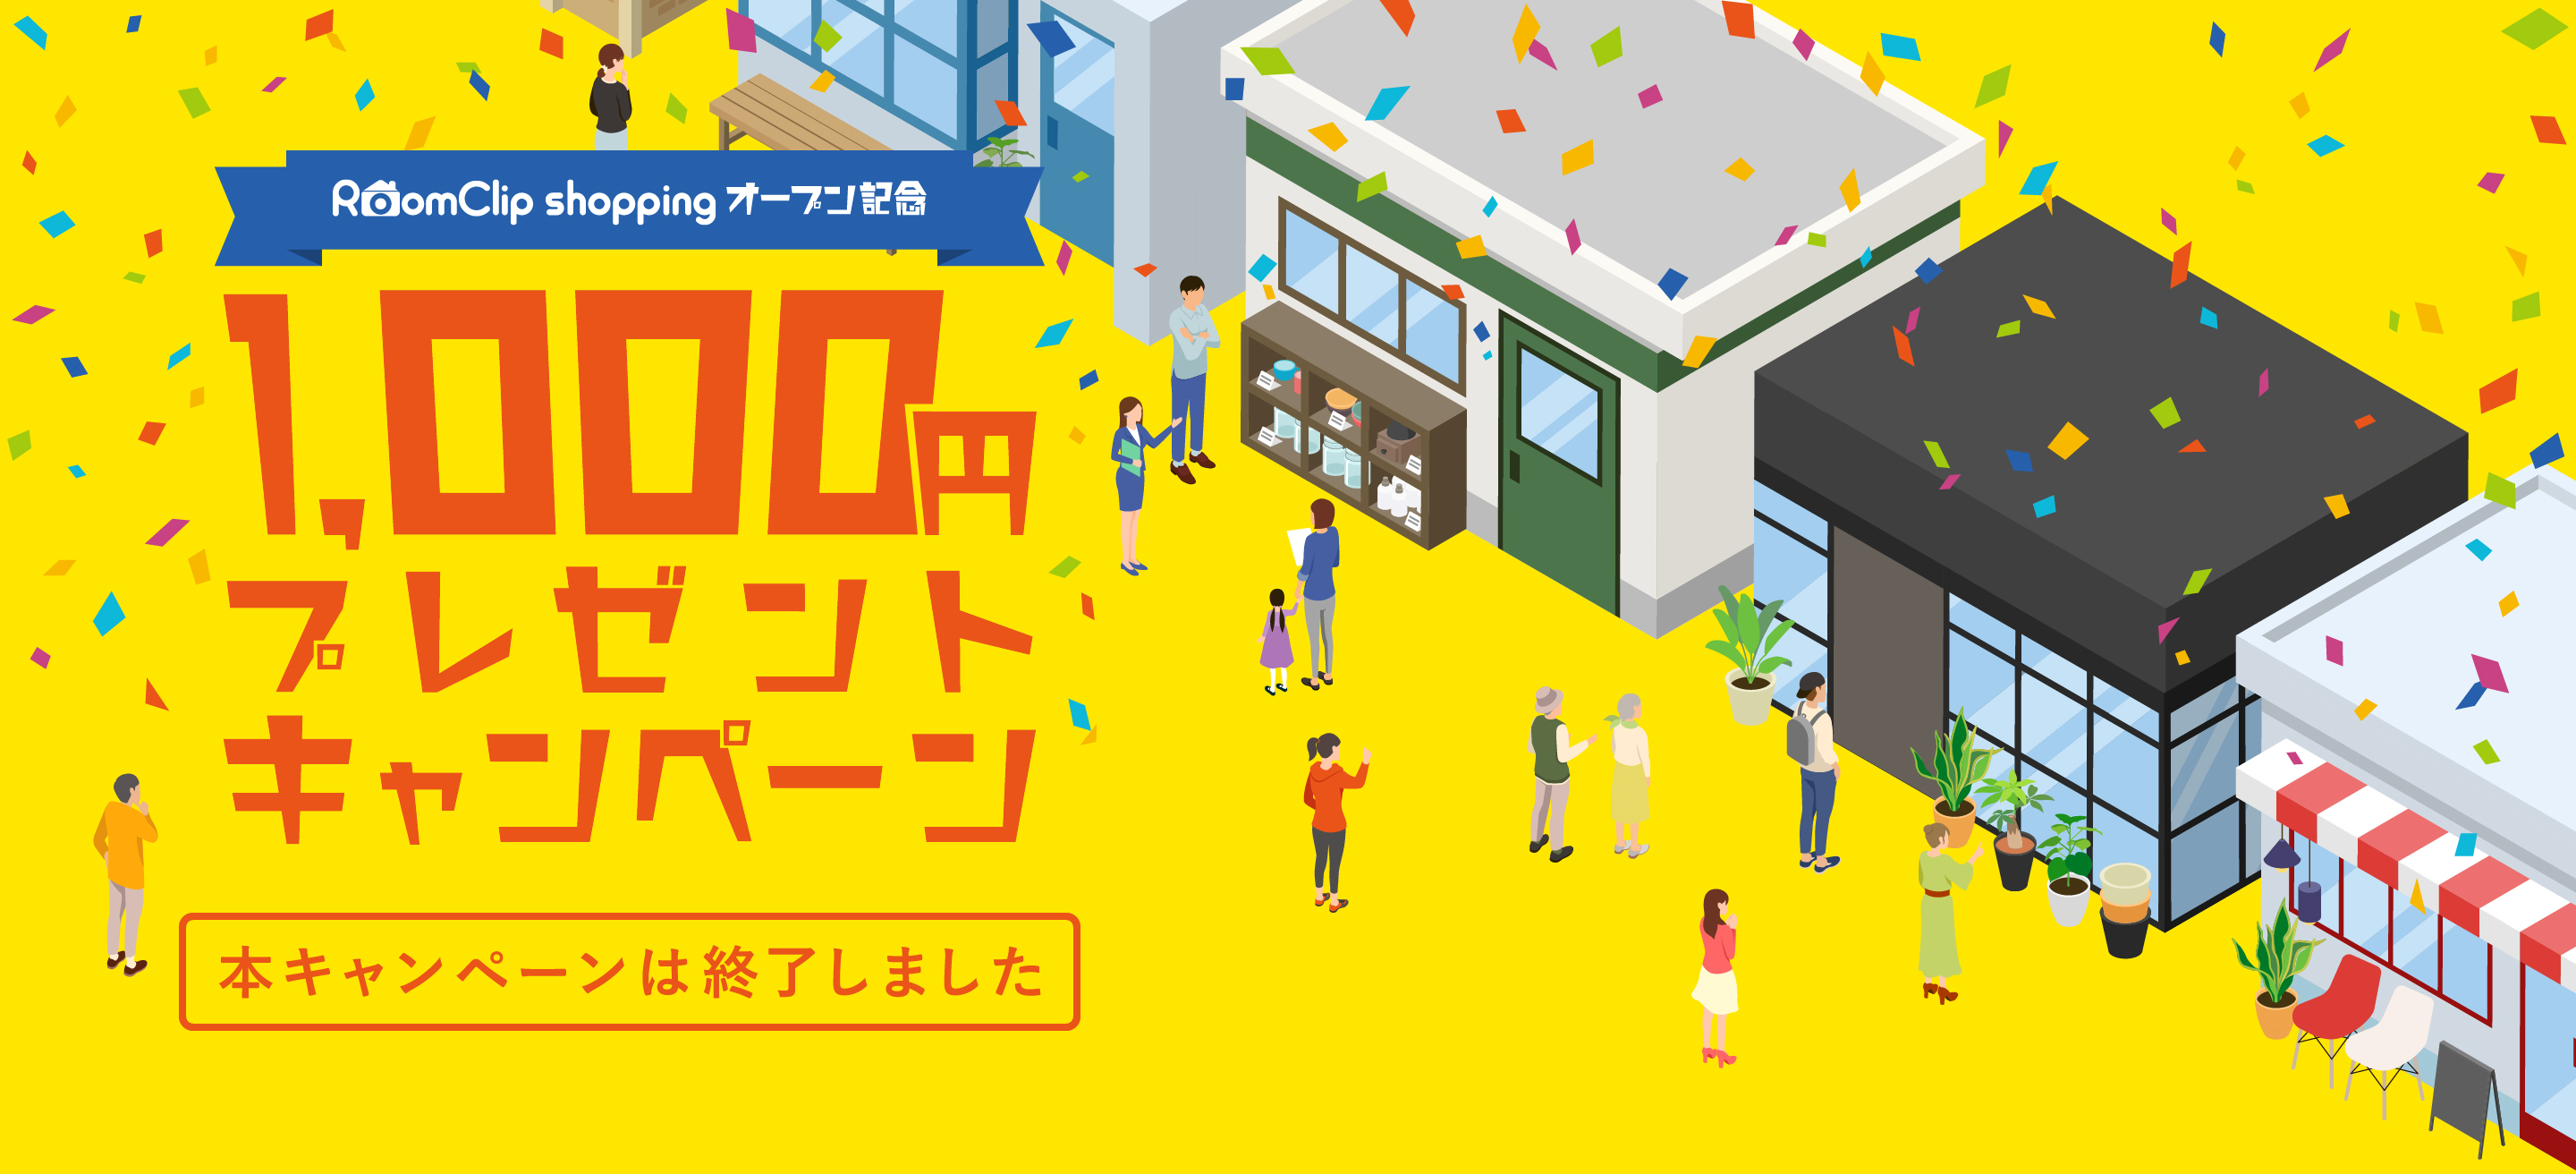 RoomClip shoppingオープン記念 10万人ユーザー還元キャンペーン 2021/4/22(木)-6/20(日)